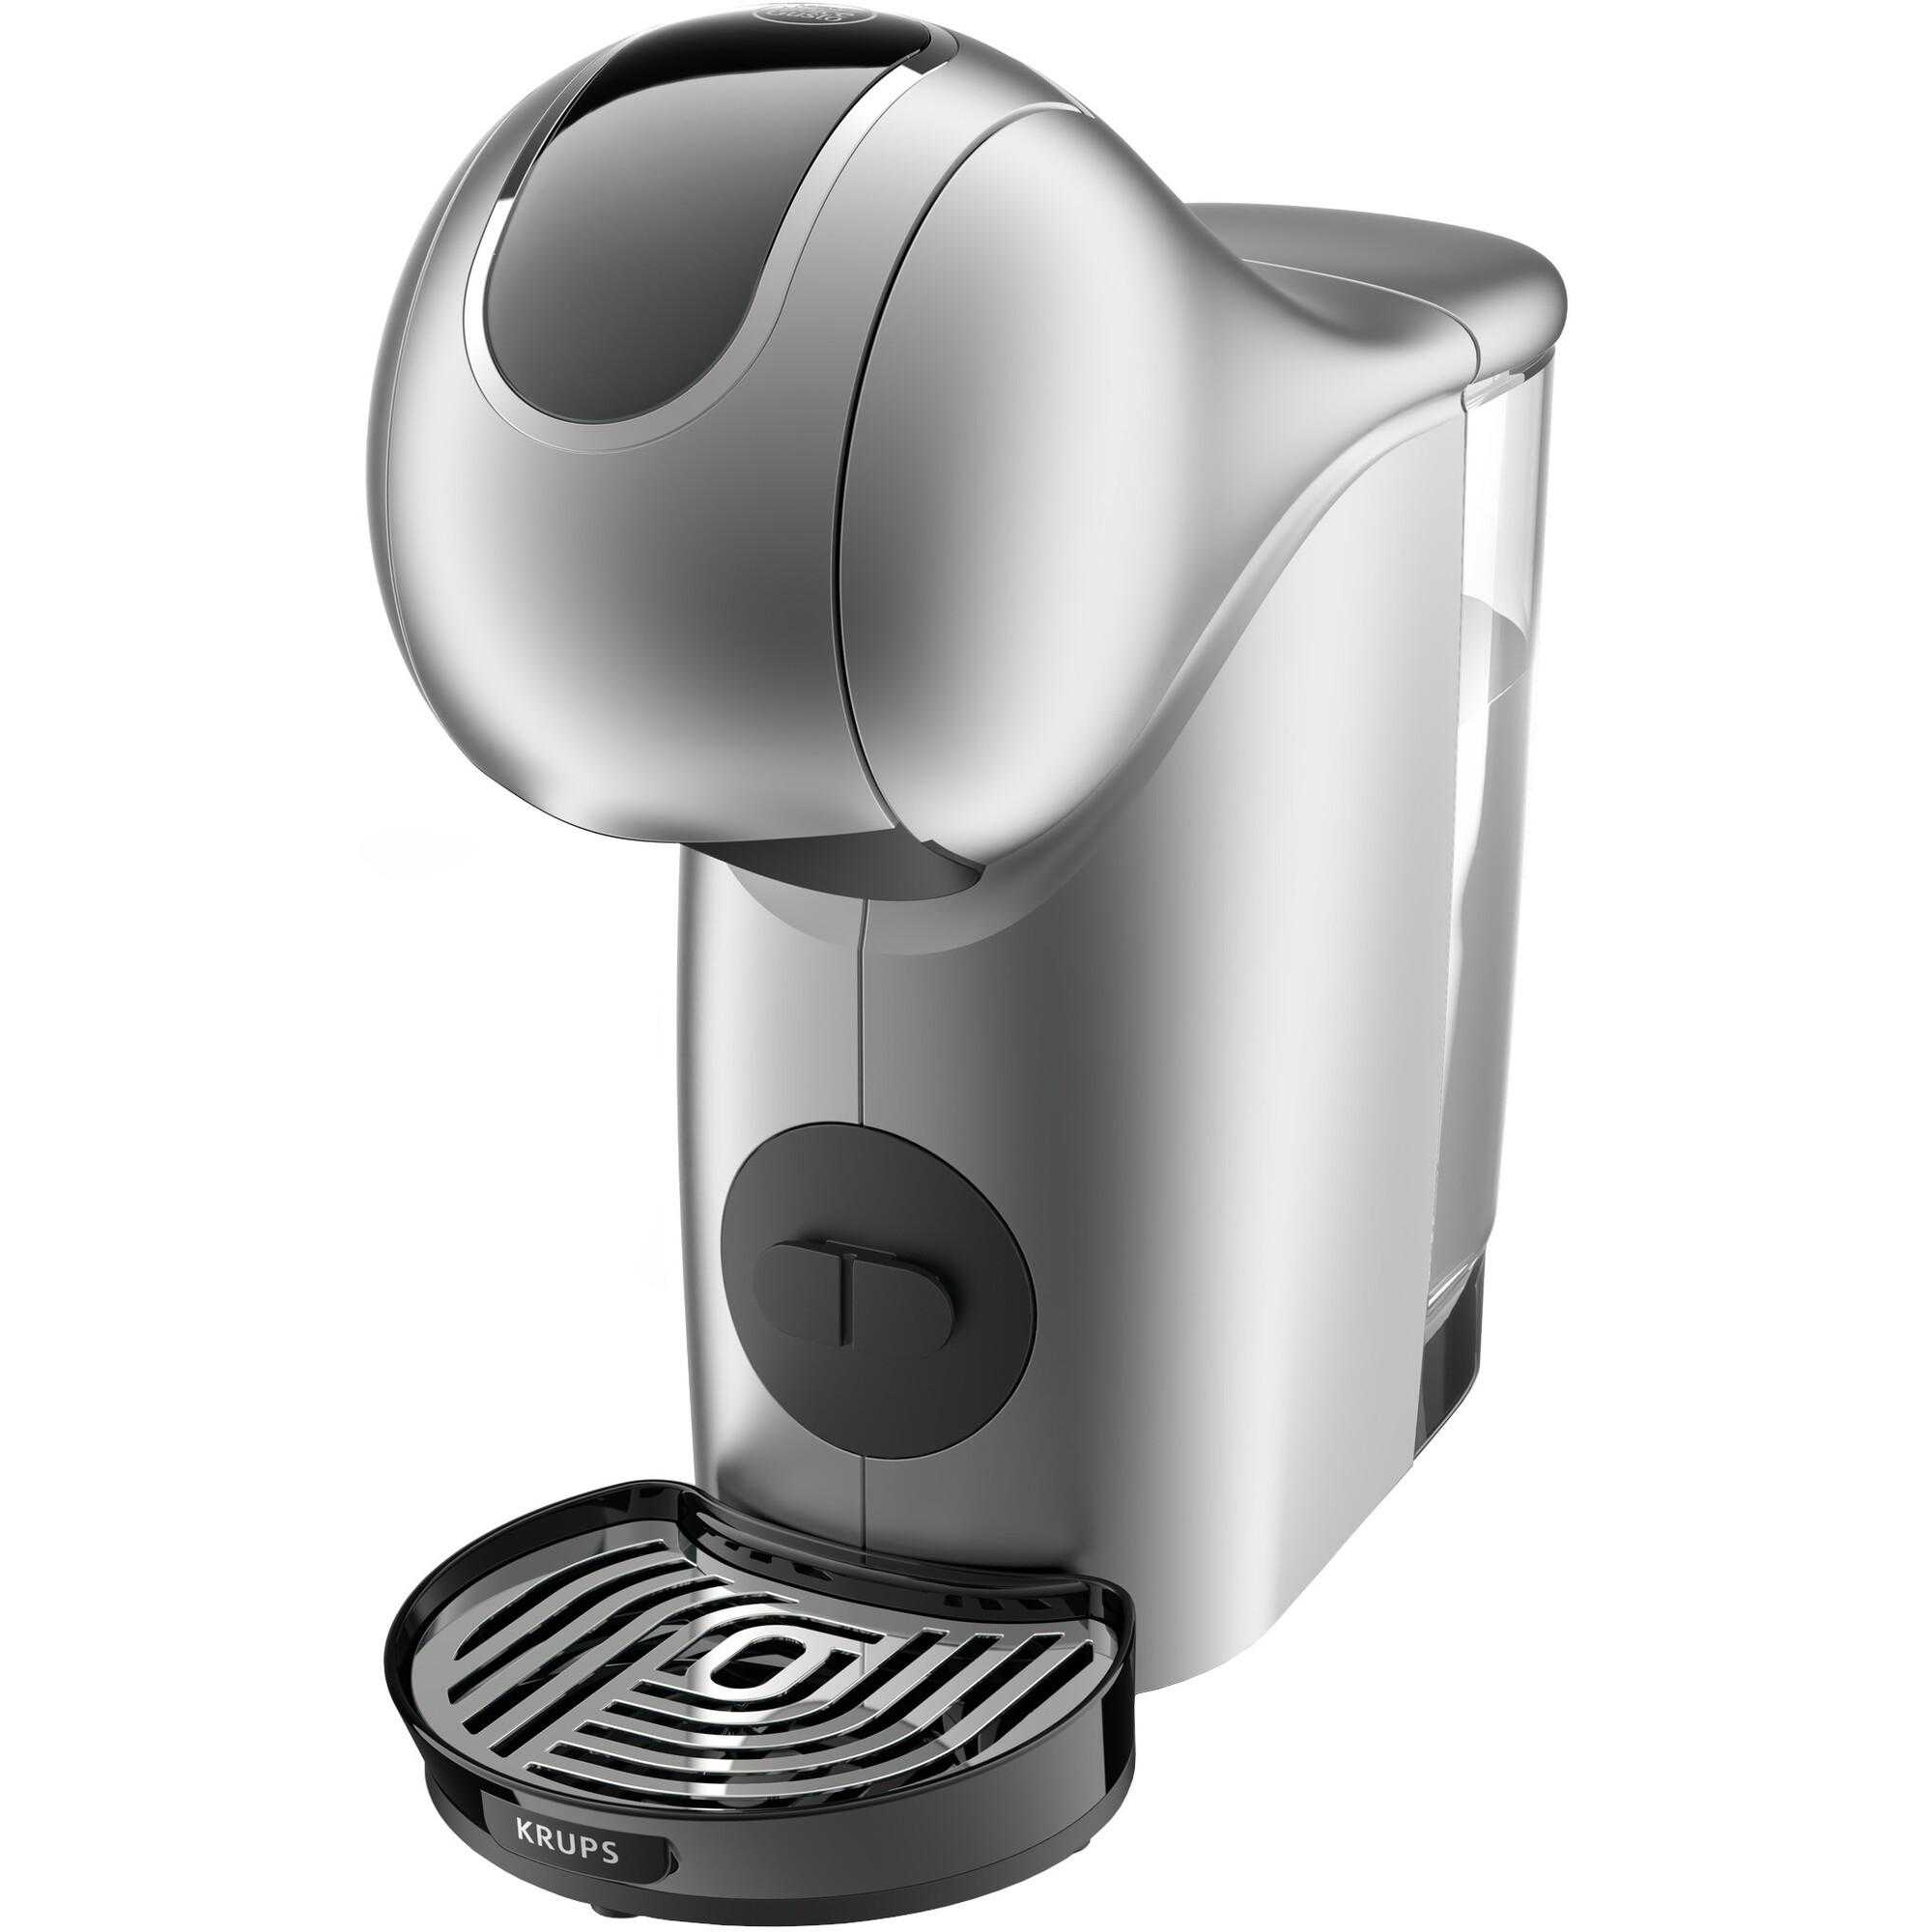  Espressor cu capsule Krups Nescafe Dolce Gusto Genio S Touch KP440E31, 1500 W, 0.8 L, 15 bar, Functie Espresso Boost, Functie XL 300ml, Argintiu 